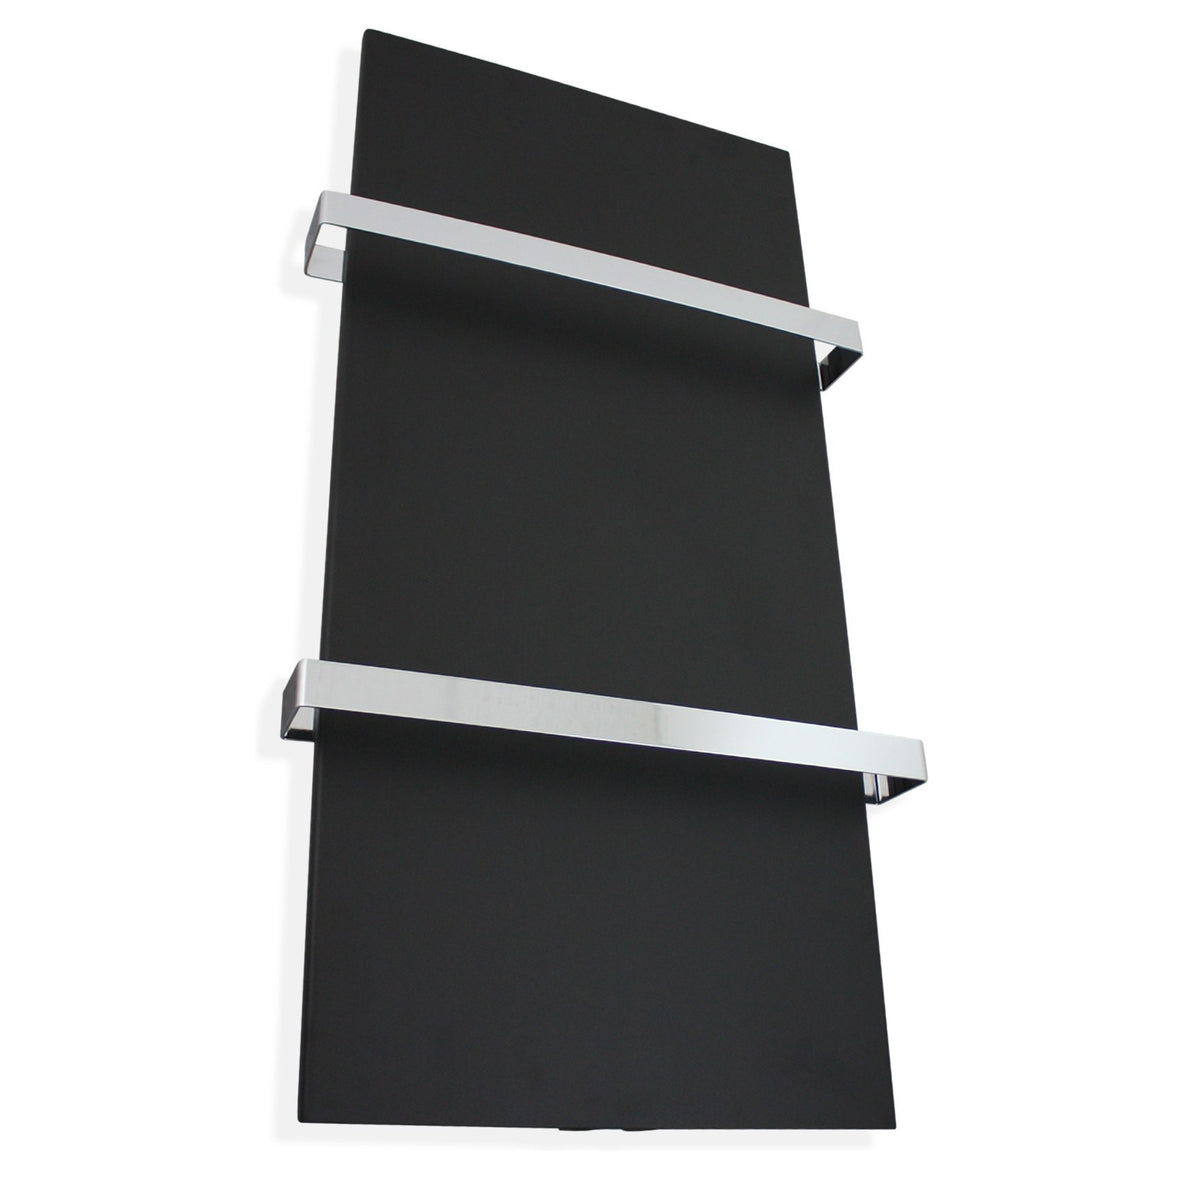 Designer Plate Style 1500 mm High x 500 mm Wide Heated Towel Rail Radiator Black - Elegant Radiators